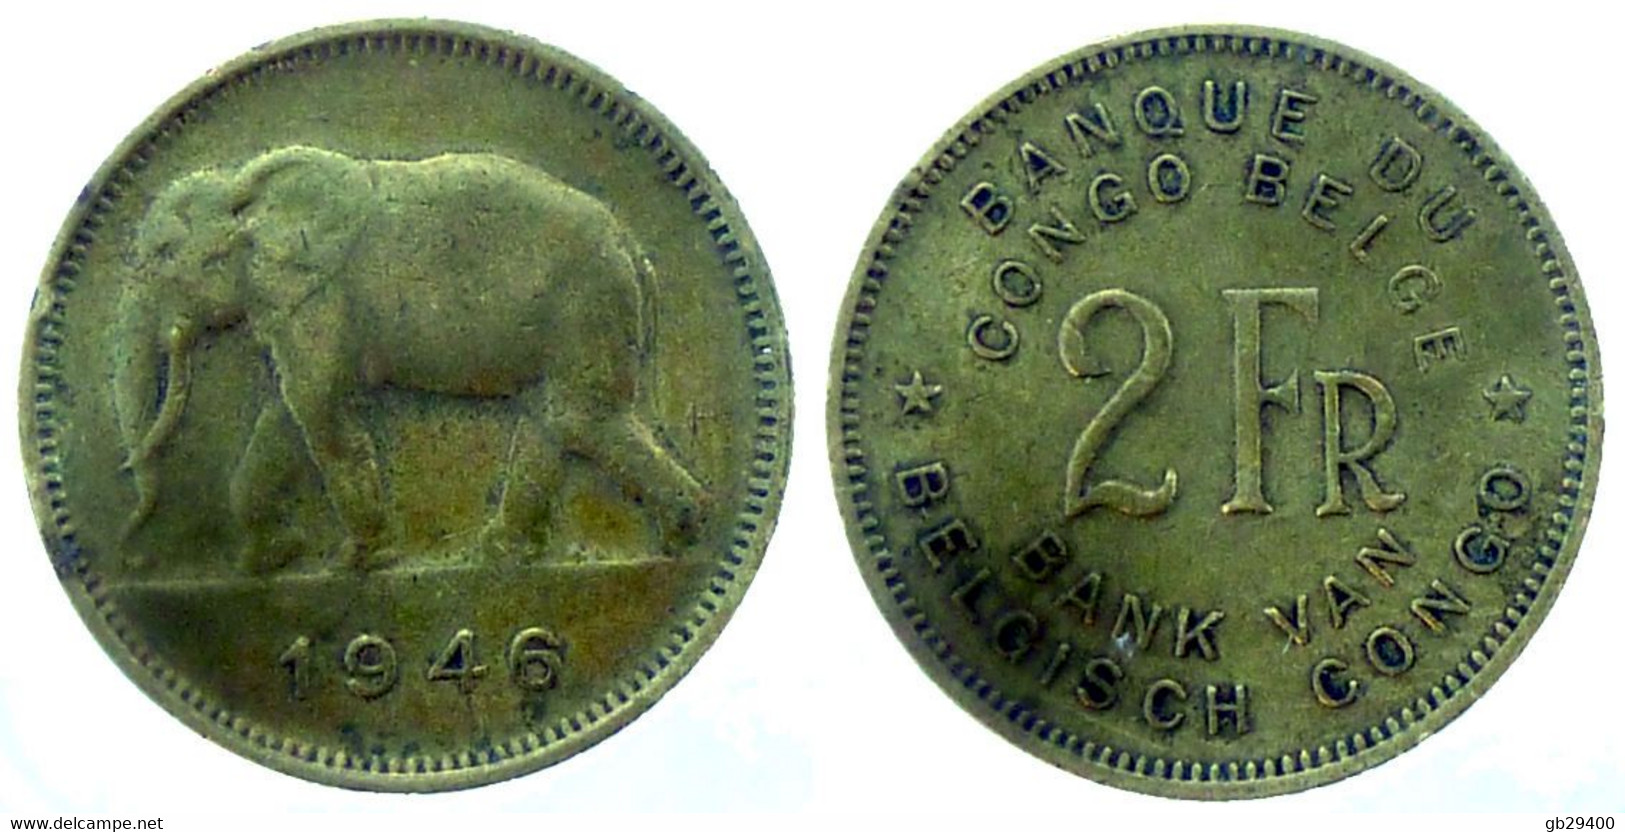 Congo Belge - 2 Francs 1946 (9237-04) - 1945-1951: Regency